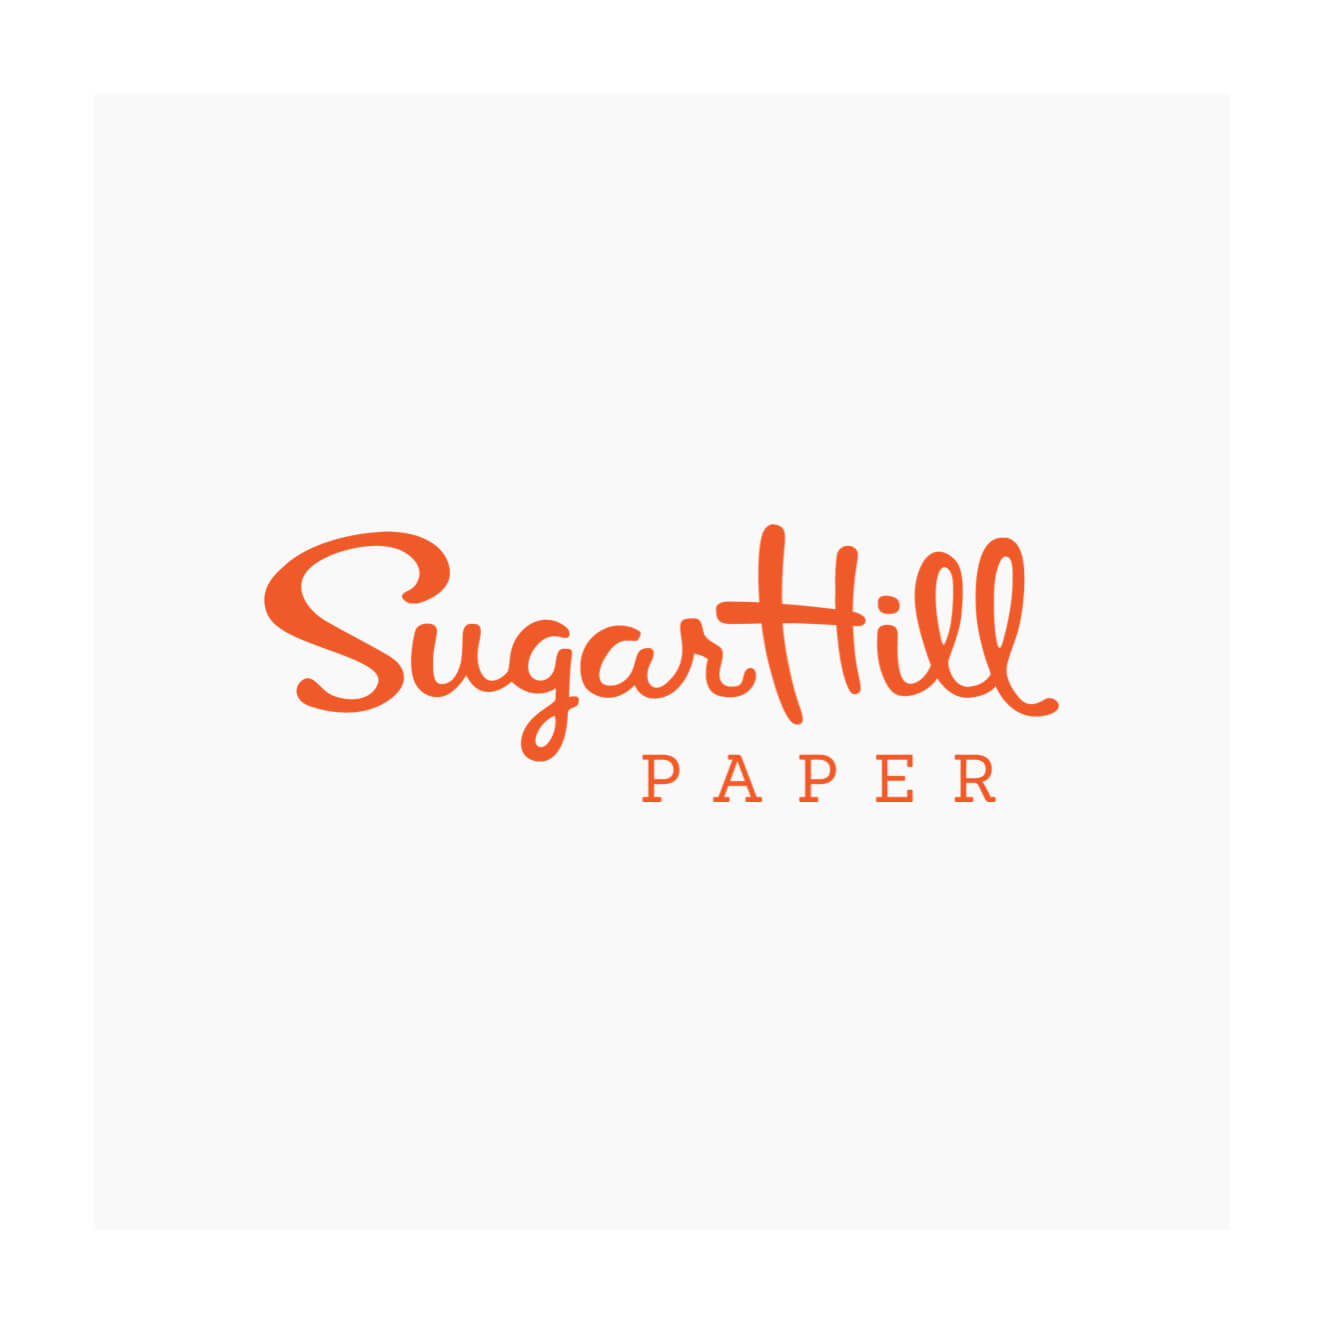 Sugar Hill Paper logo